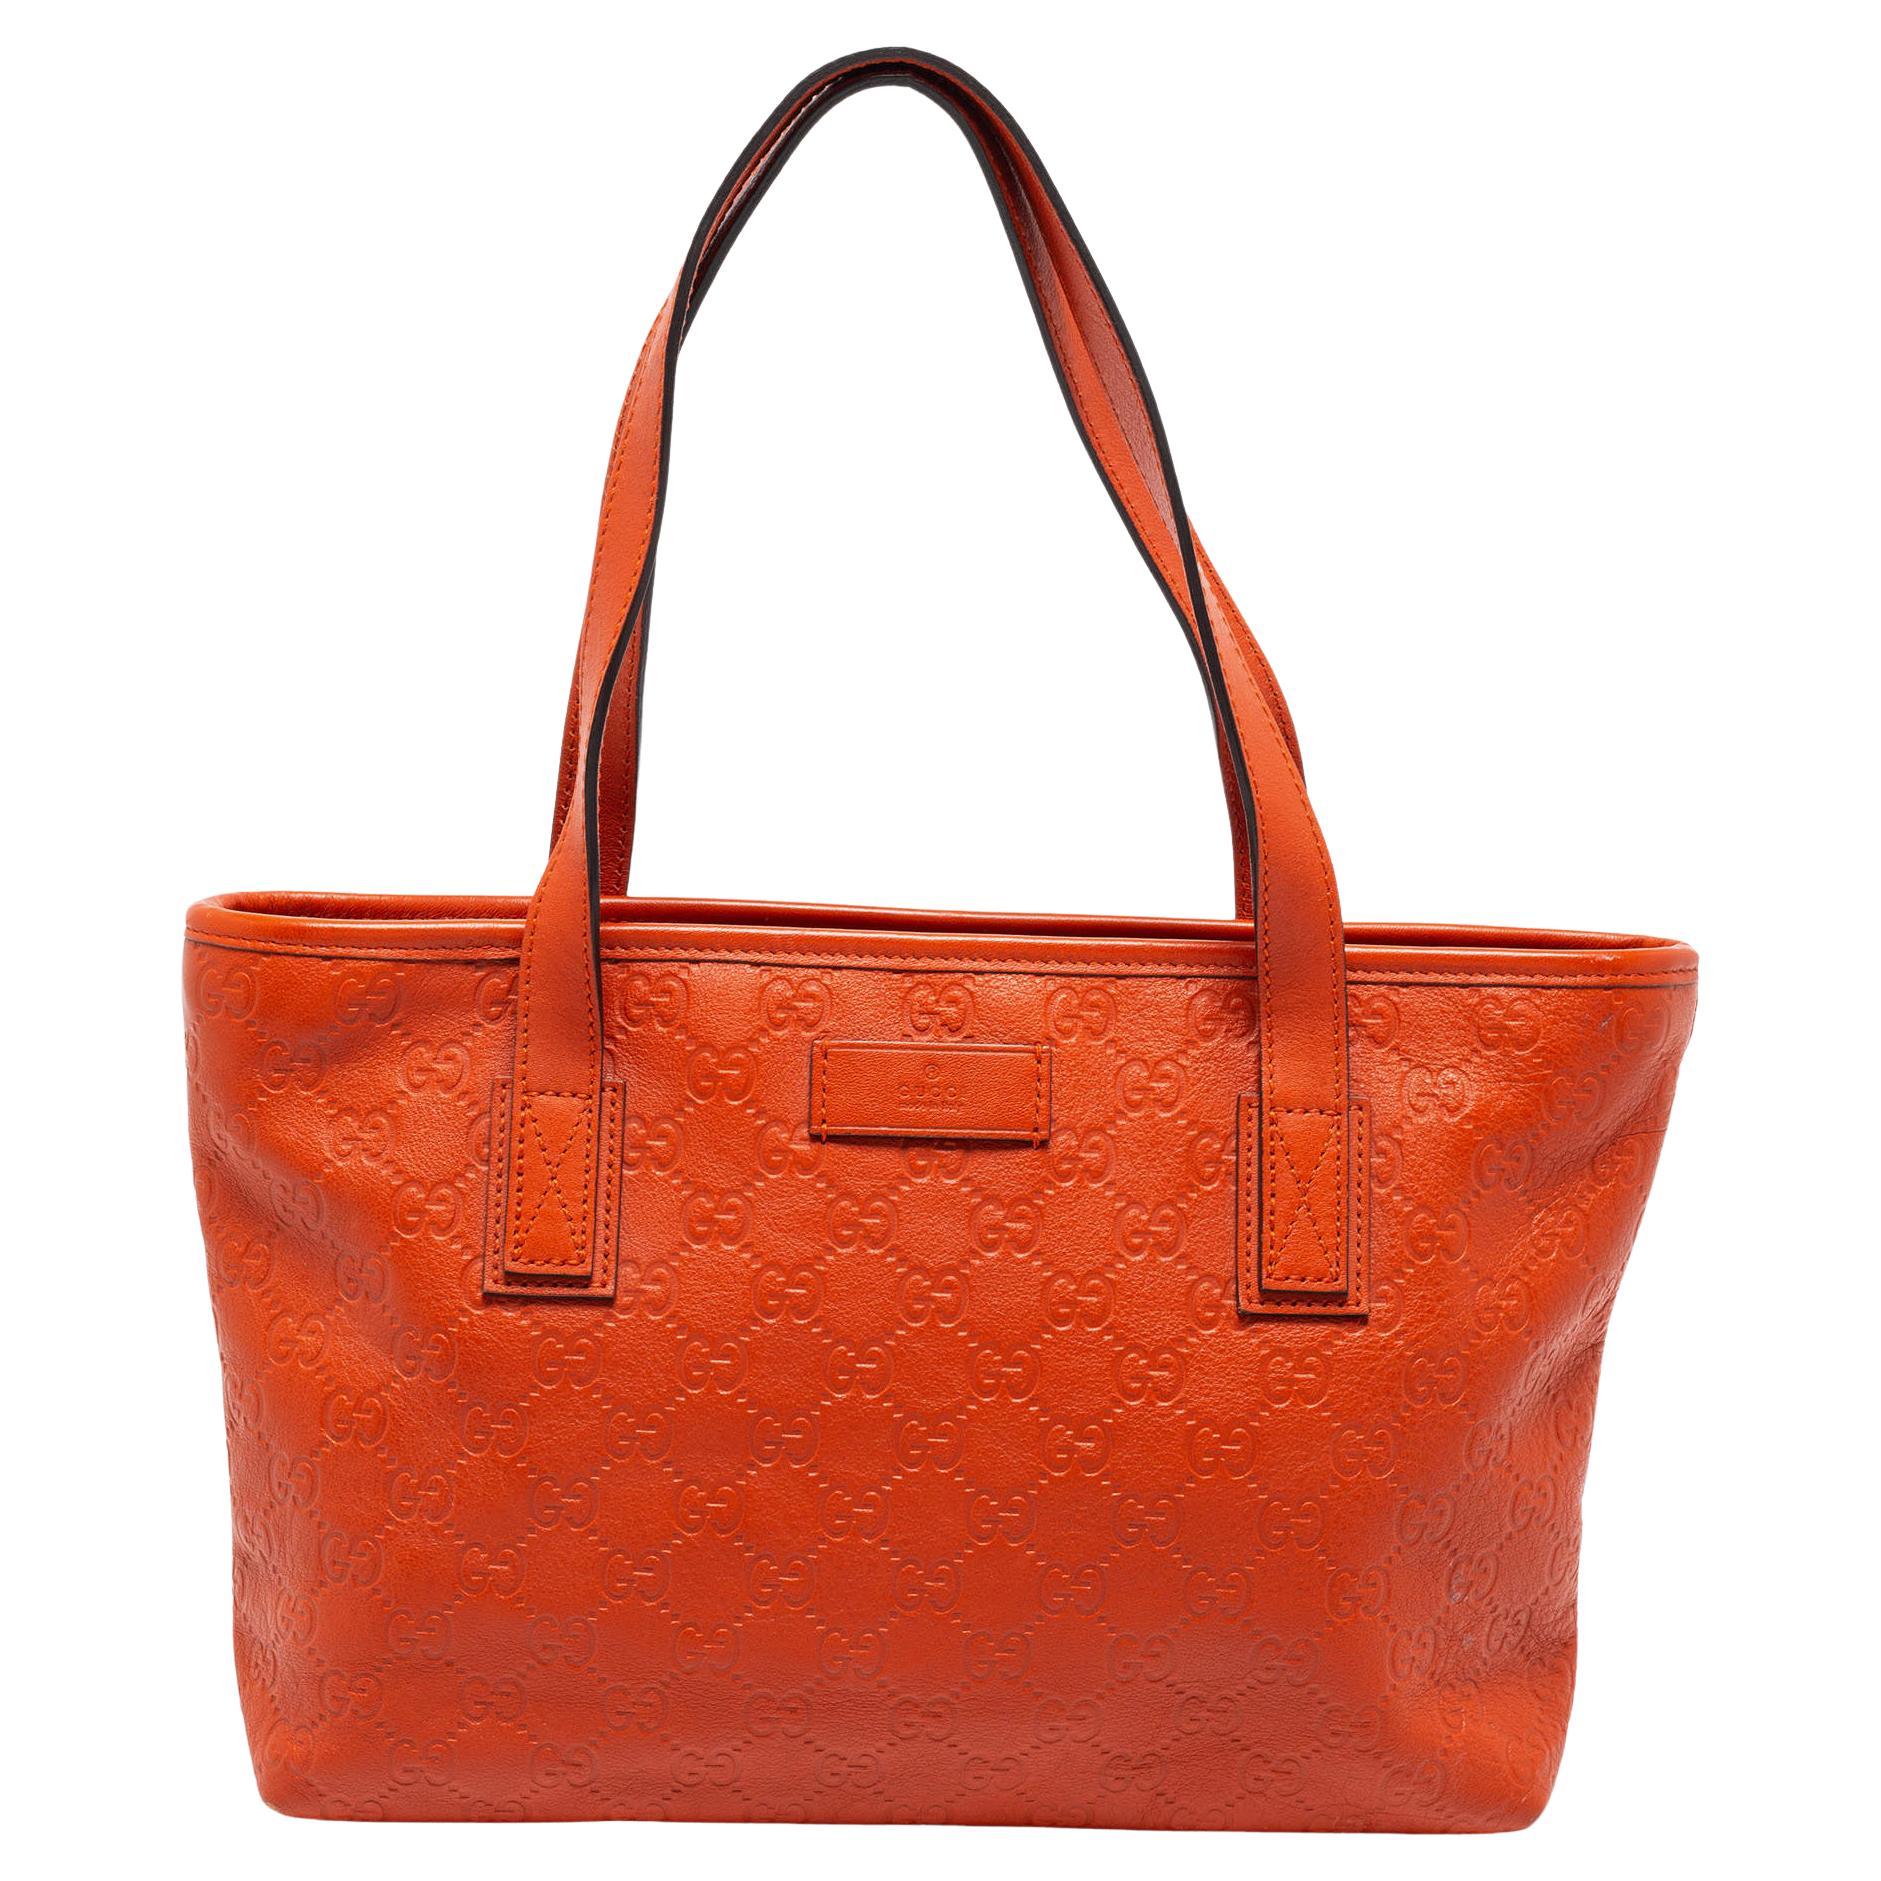 Florence Tote leather bag croco-embossed orange